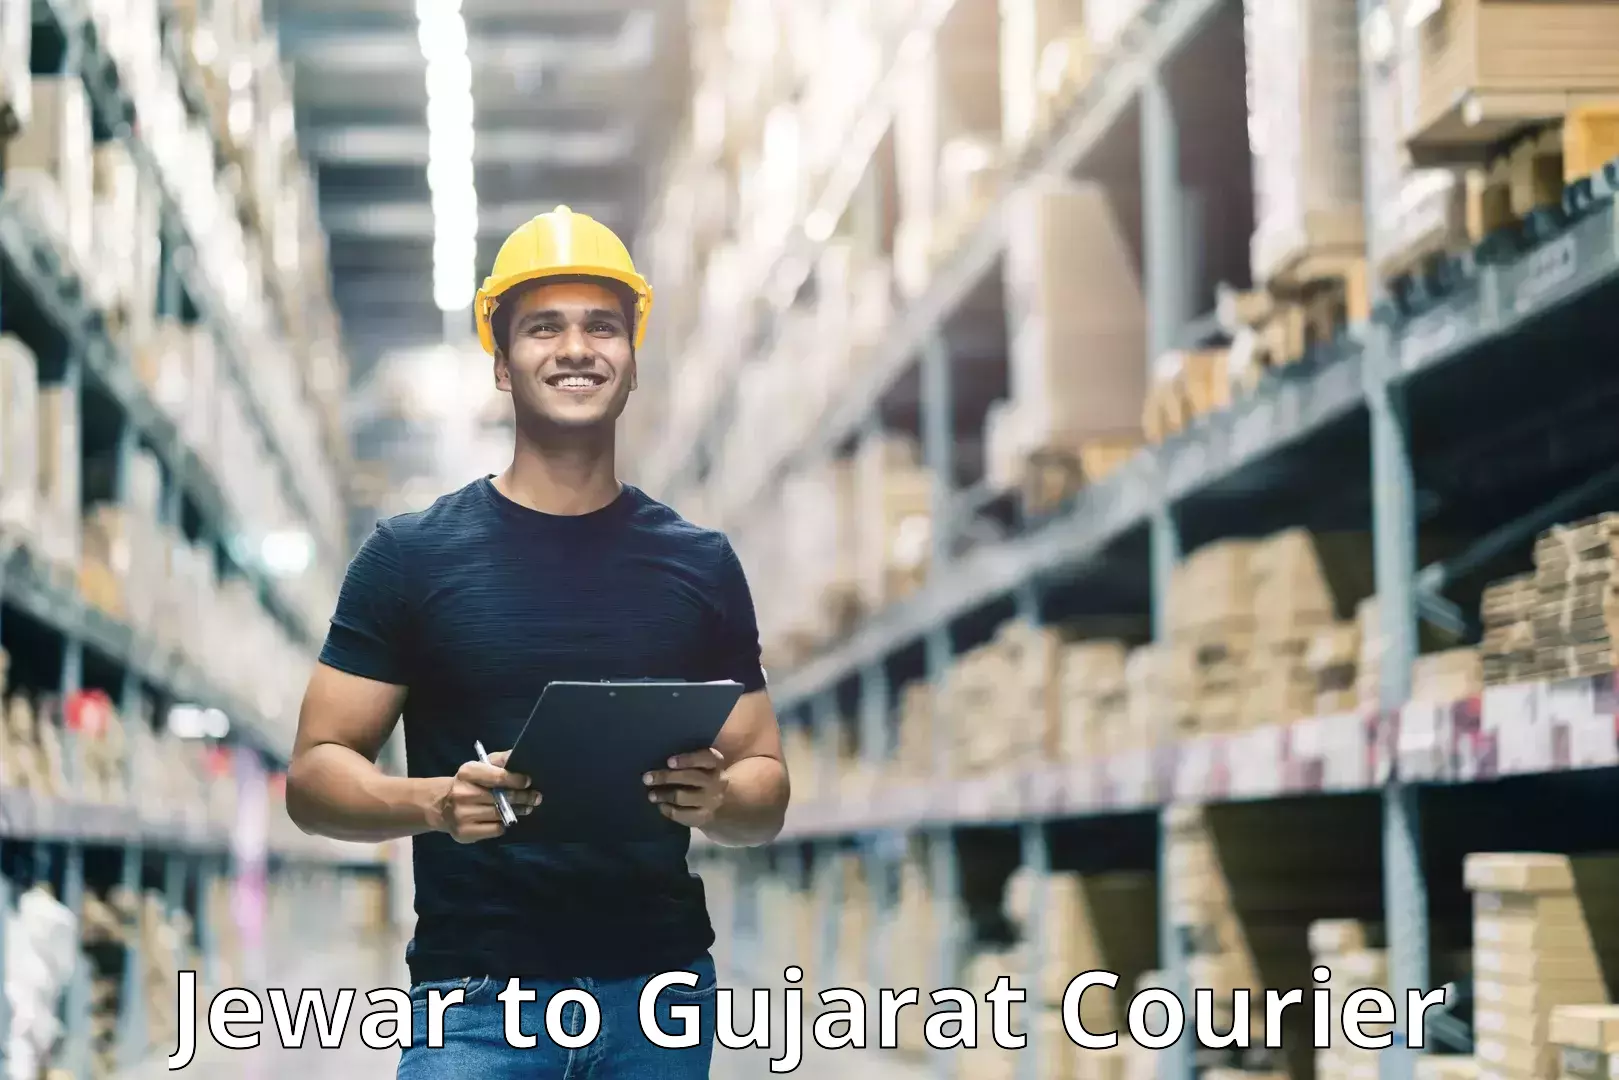 User-friendly delivery service Jewar to Gujarat